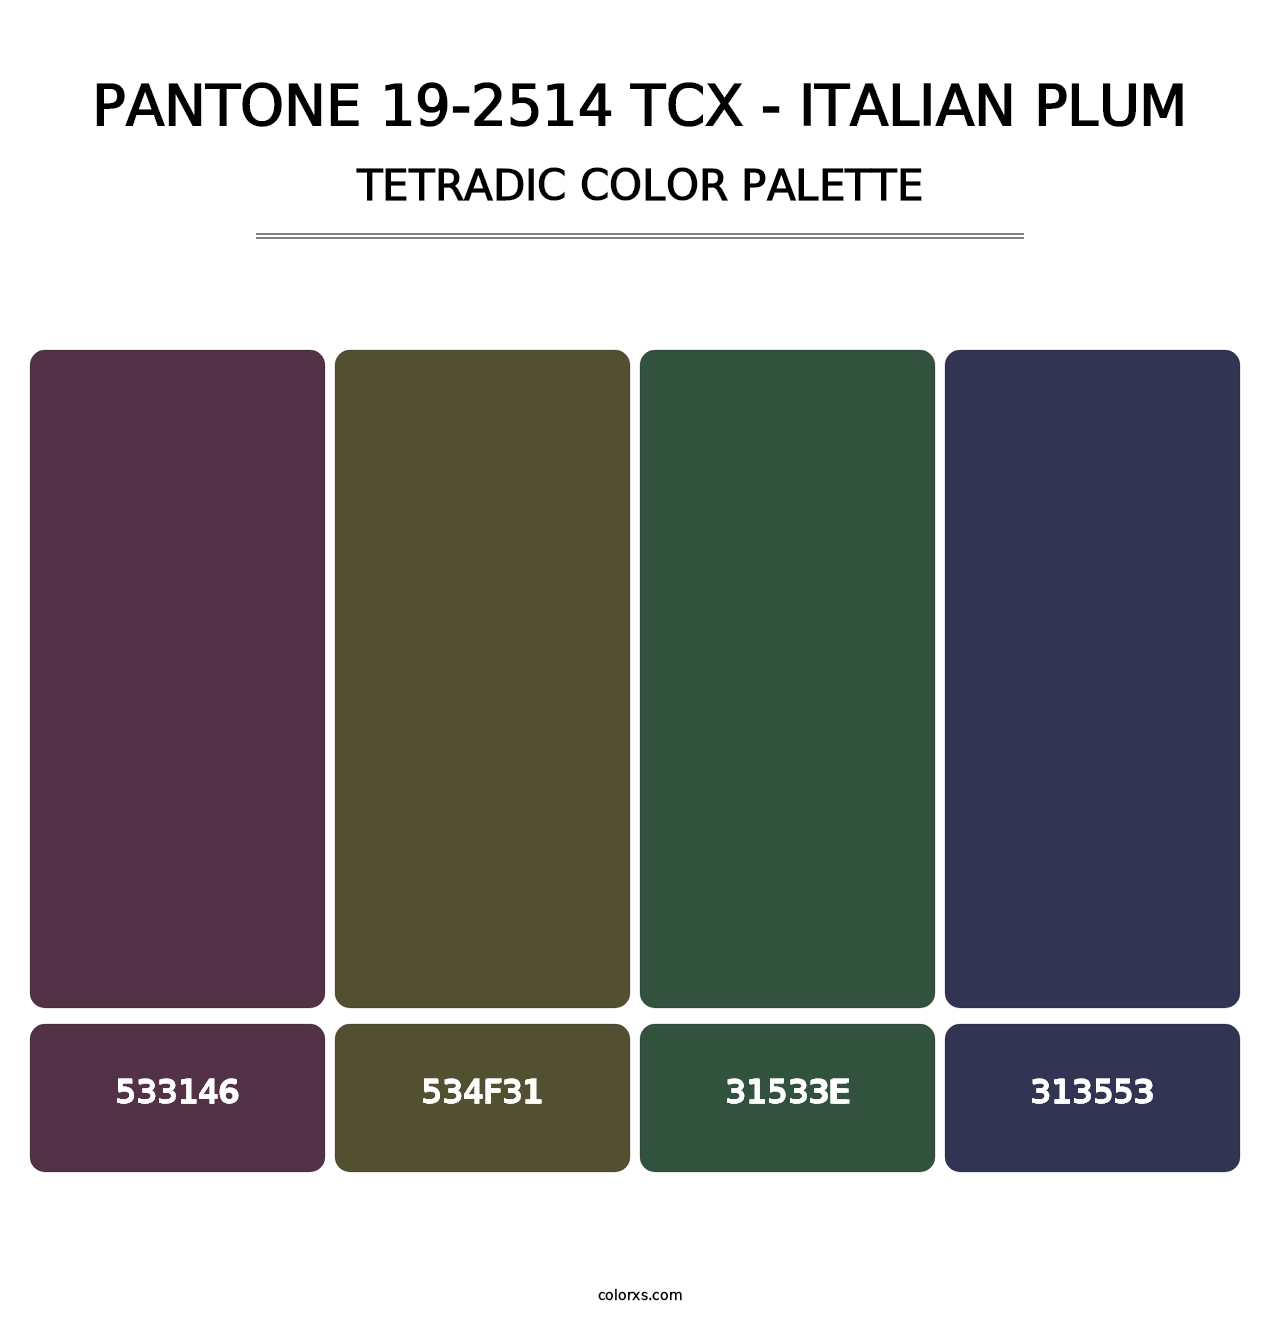 PANTONE 19-2514 TCX - Italian Plum - Tetradic Color Palette